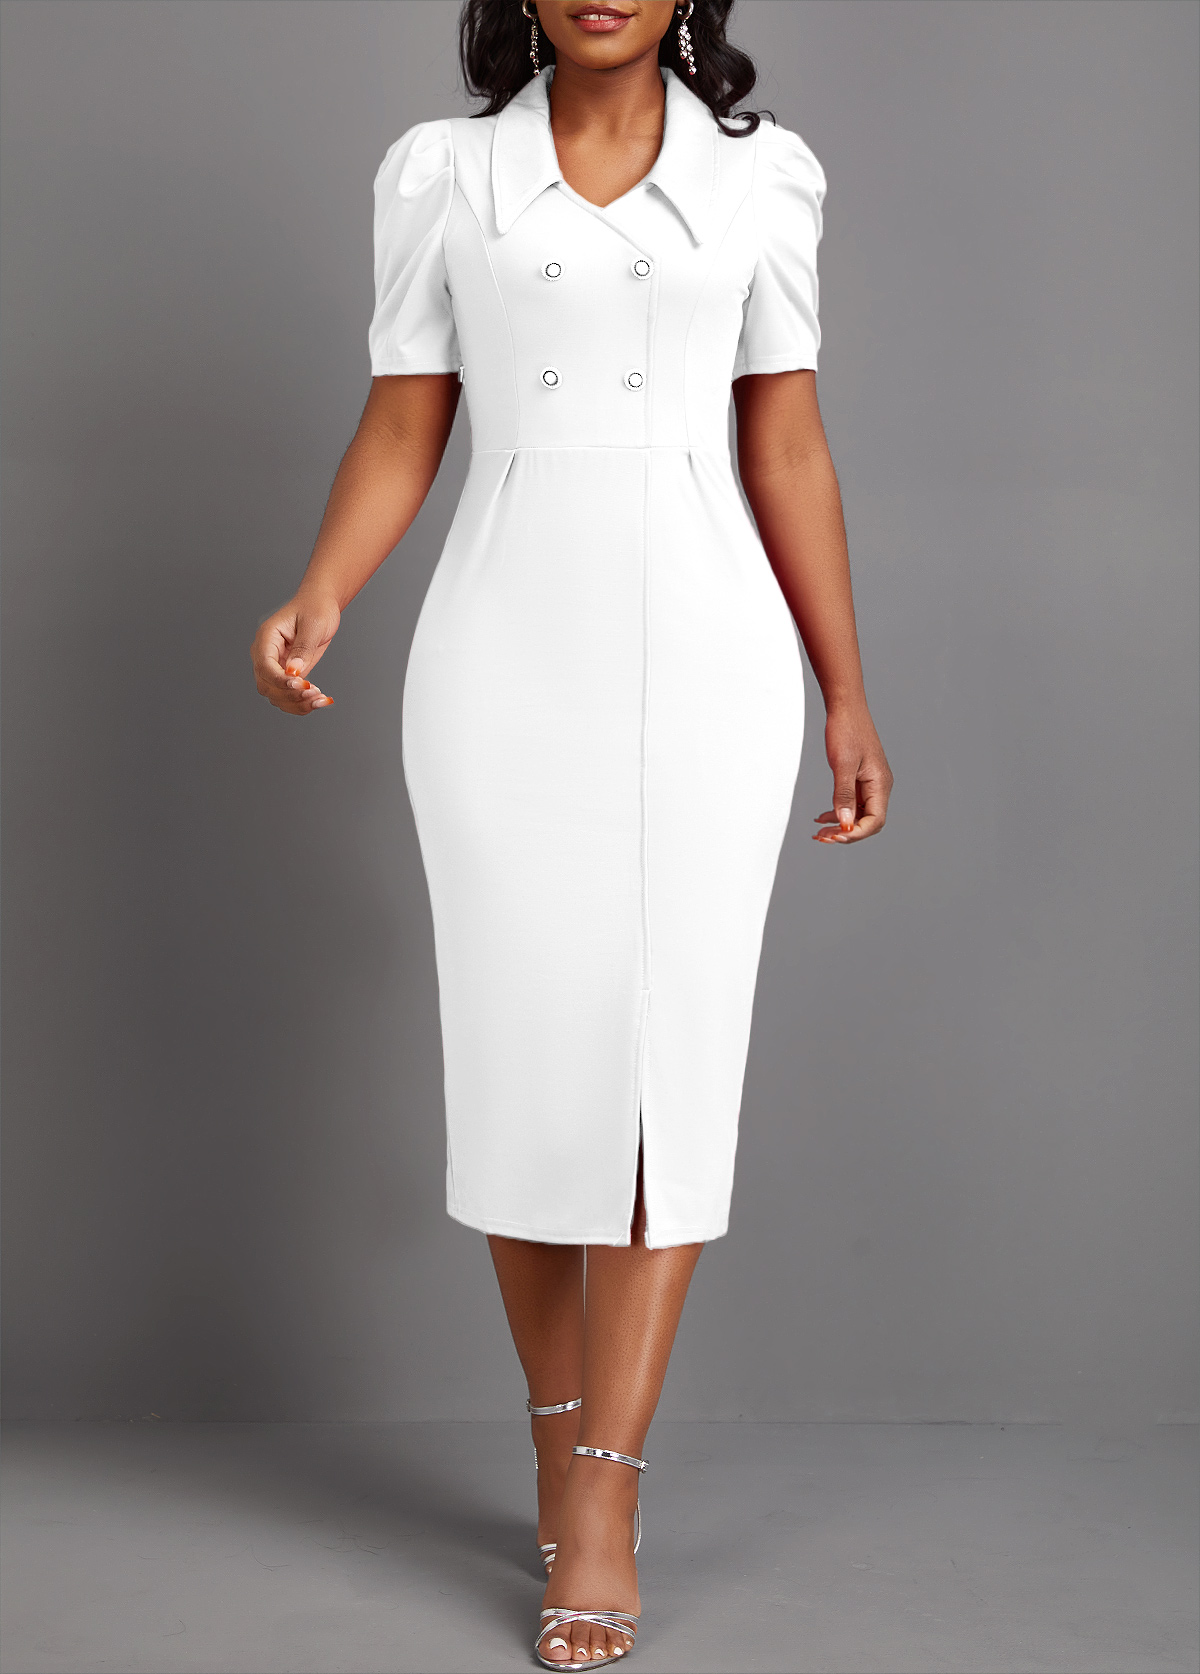 White Button Short Sleeve Bodycon Dress